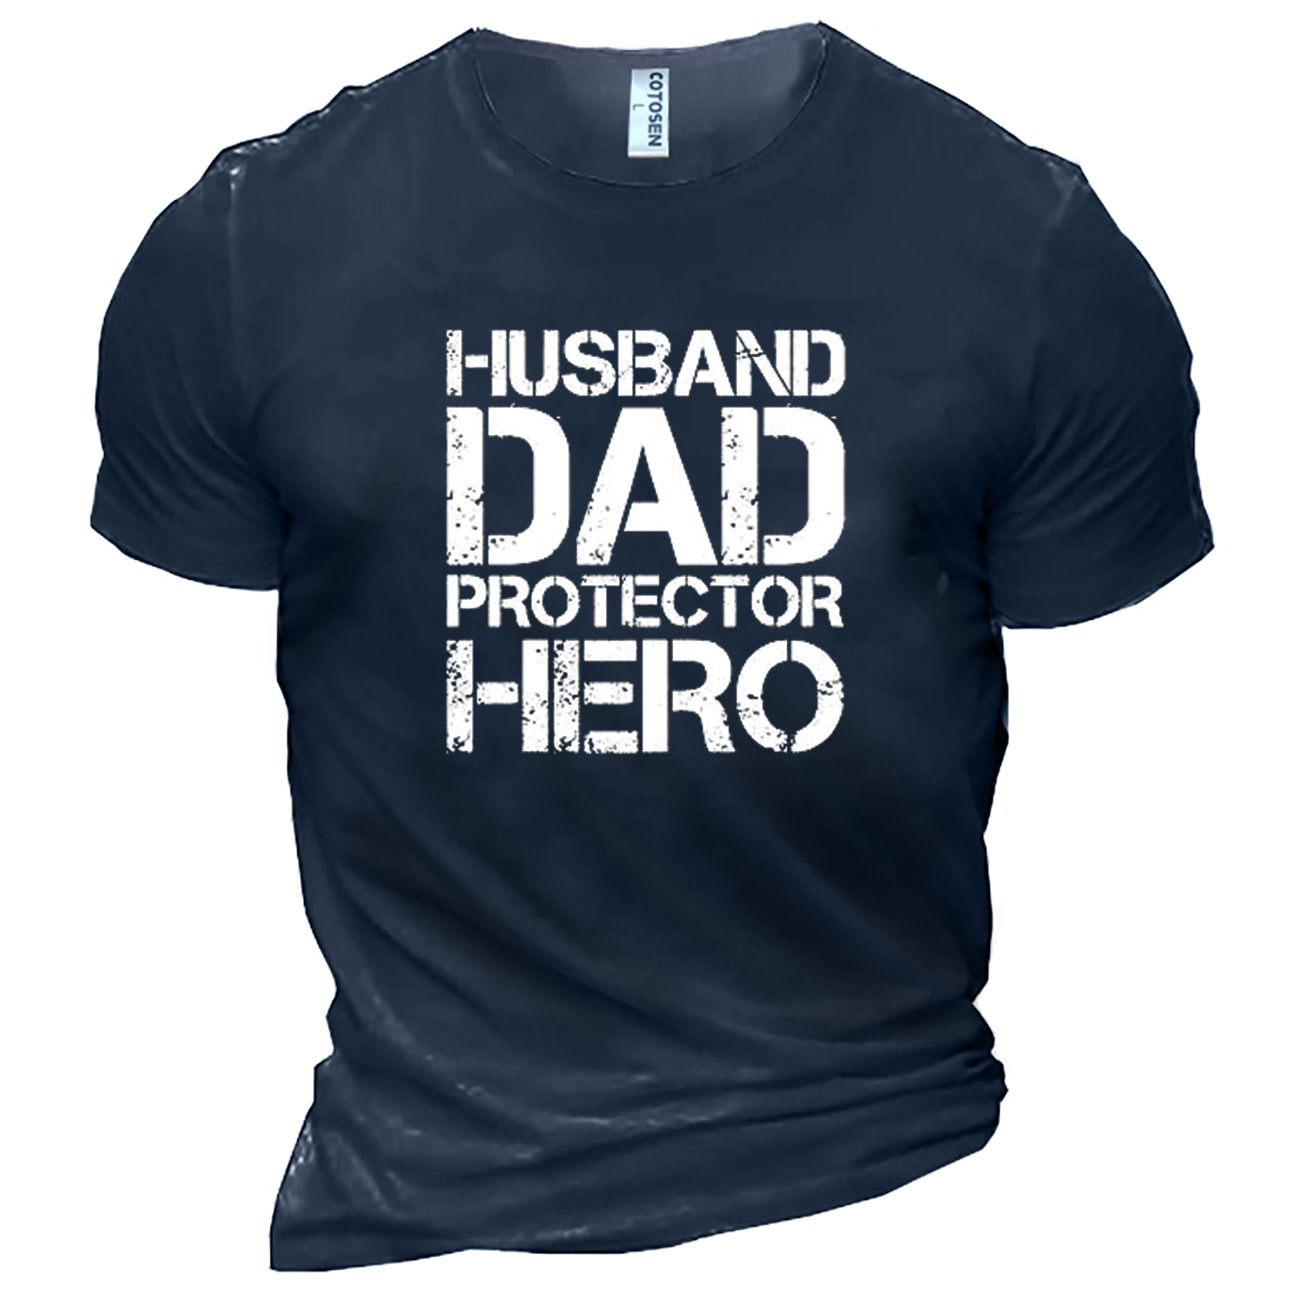 Men's Husband Dad Protector Chic Hero Cotton T-shirt